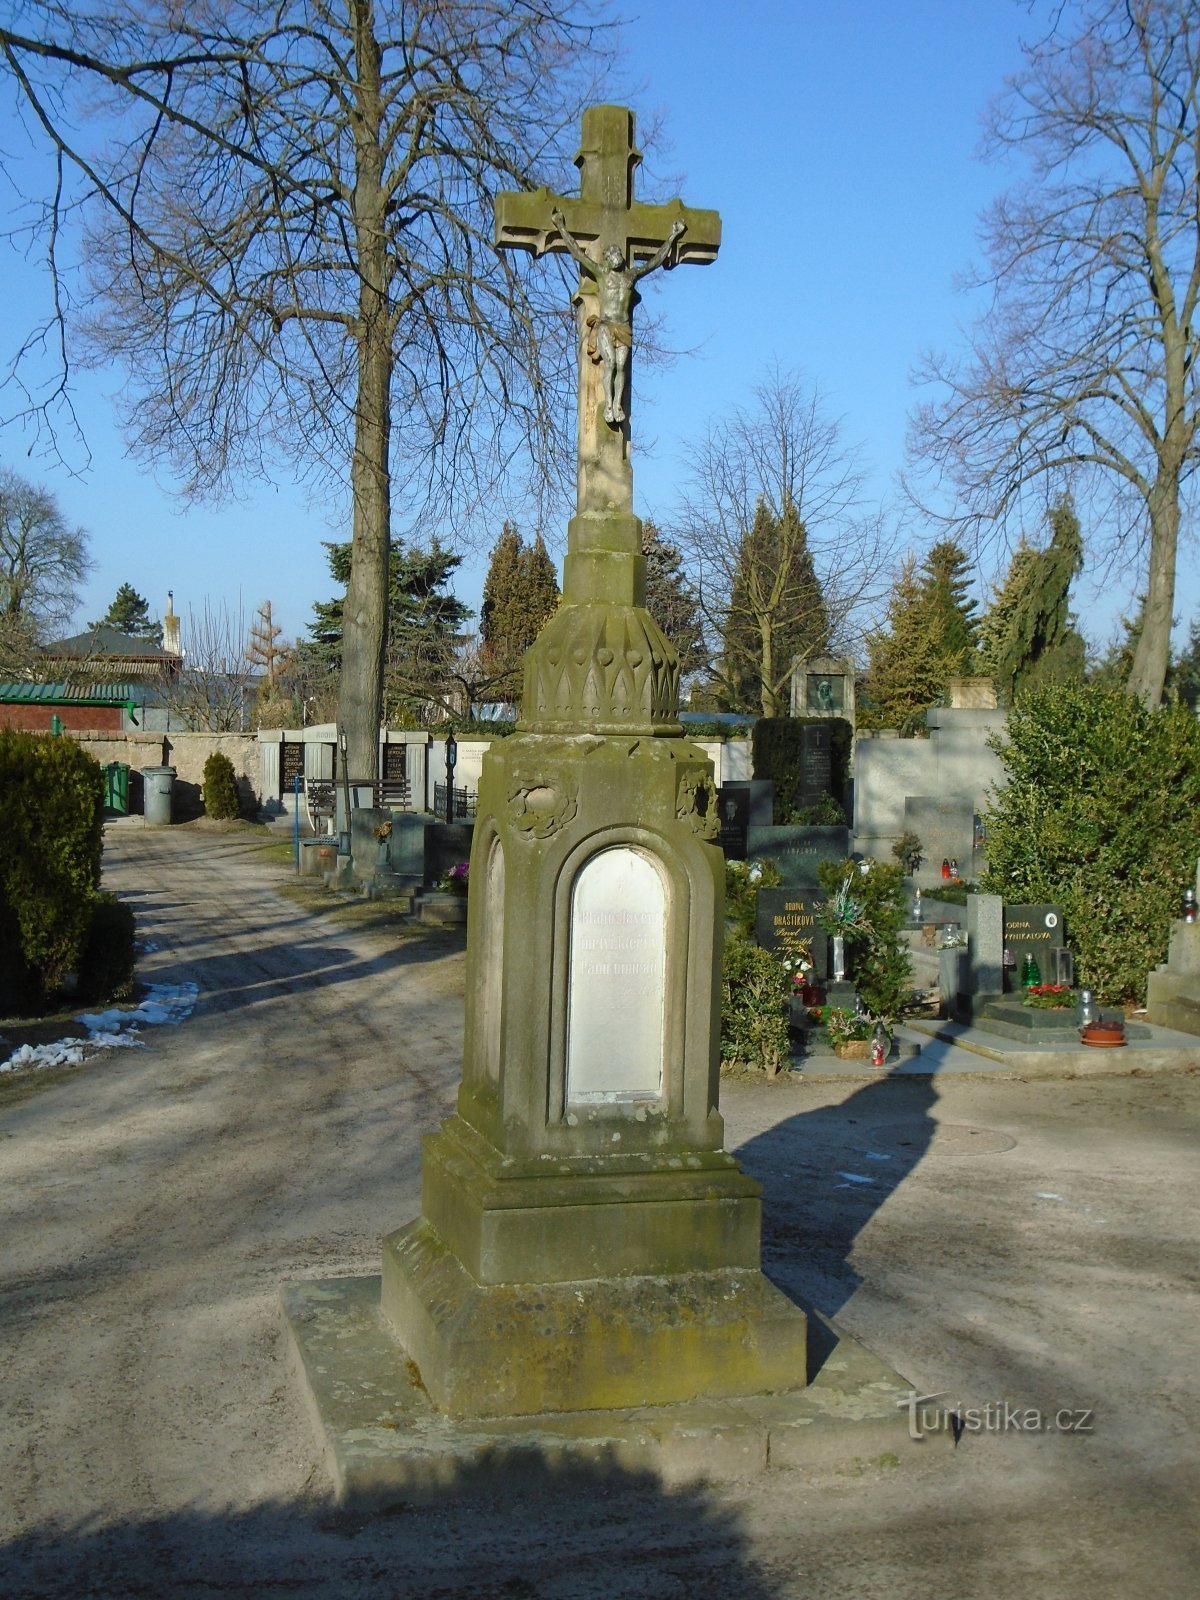 Thánh giá nghĩa trang ở Pouchov (Hradec Králové, 22.2.2018/XNUMX/XNUMX)